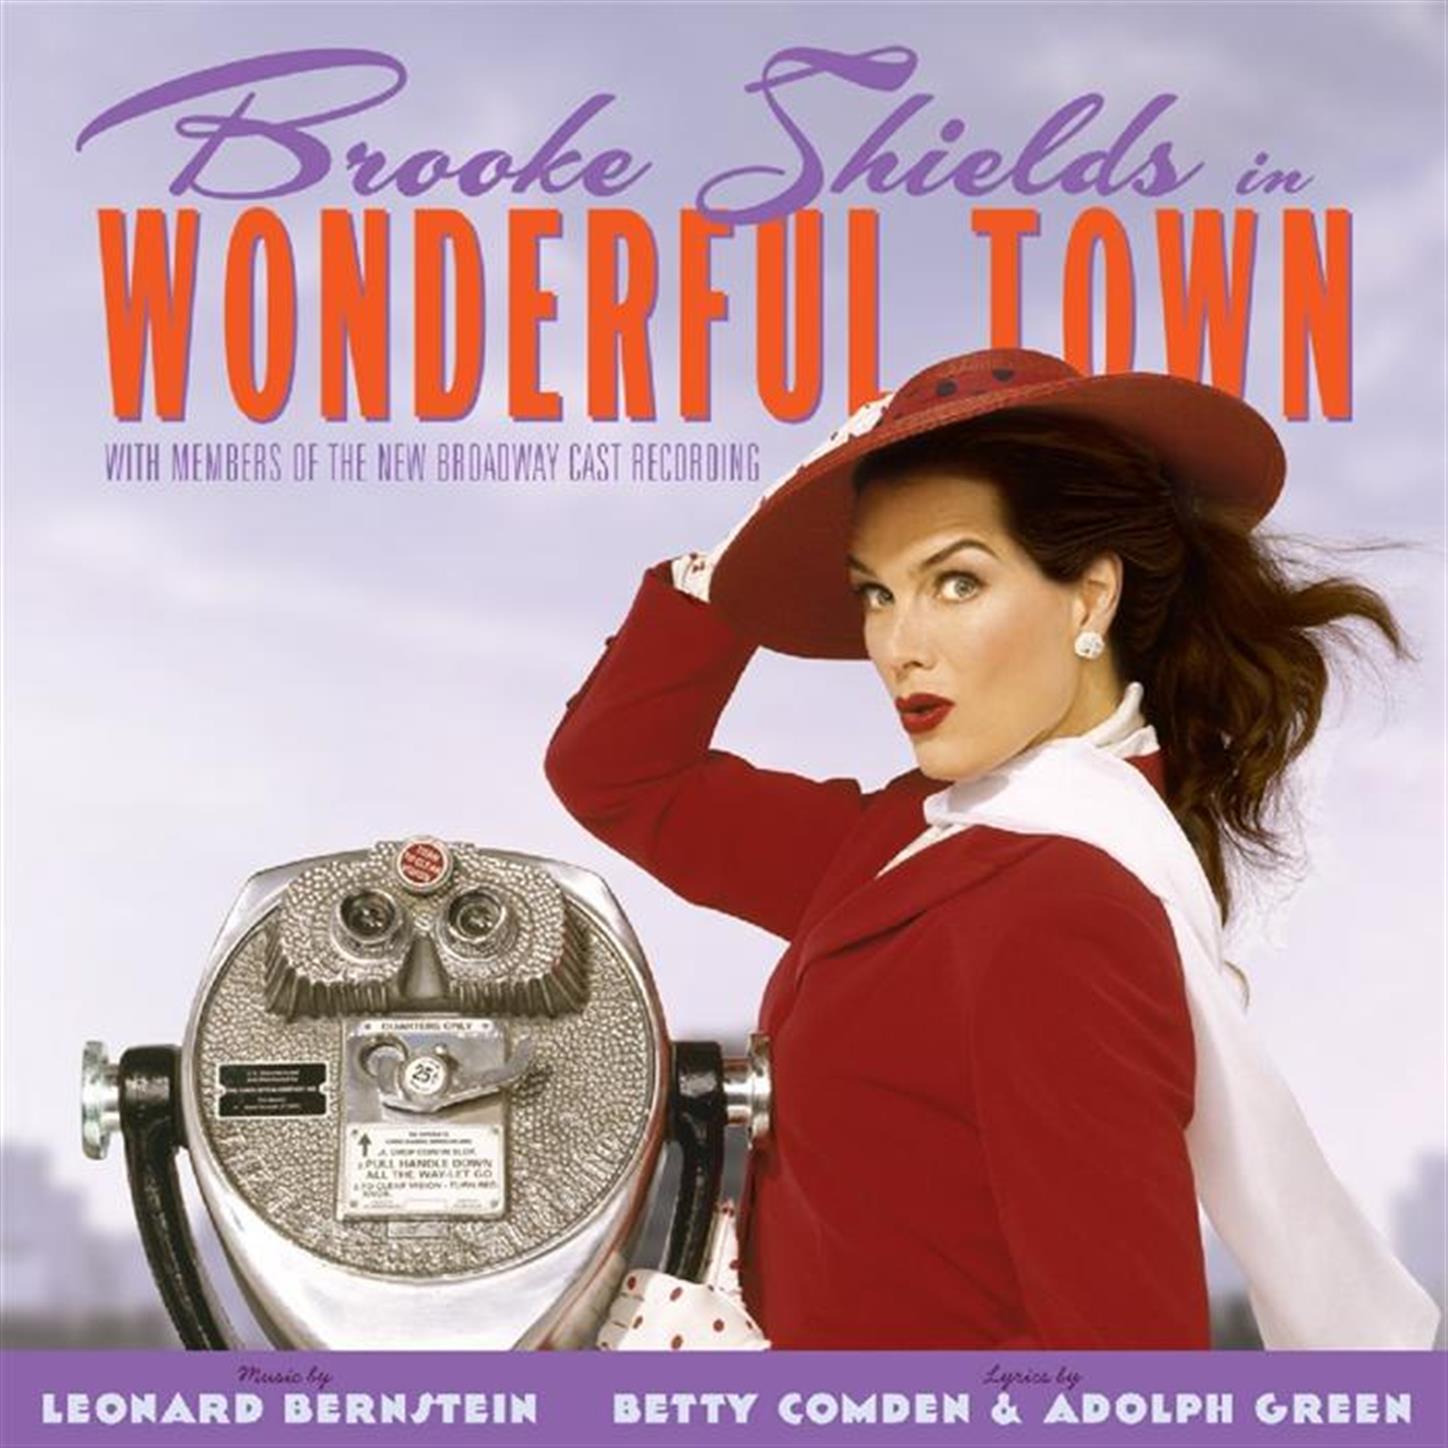 Wonderful Town - New Broadway Cast Featuring Brooke Shields